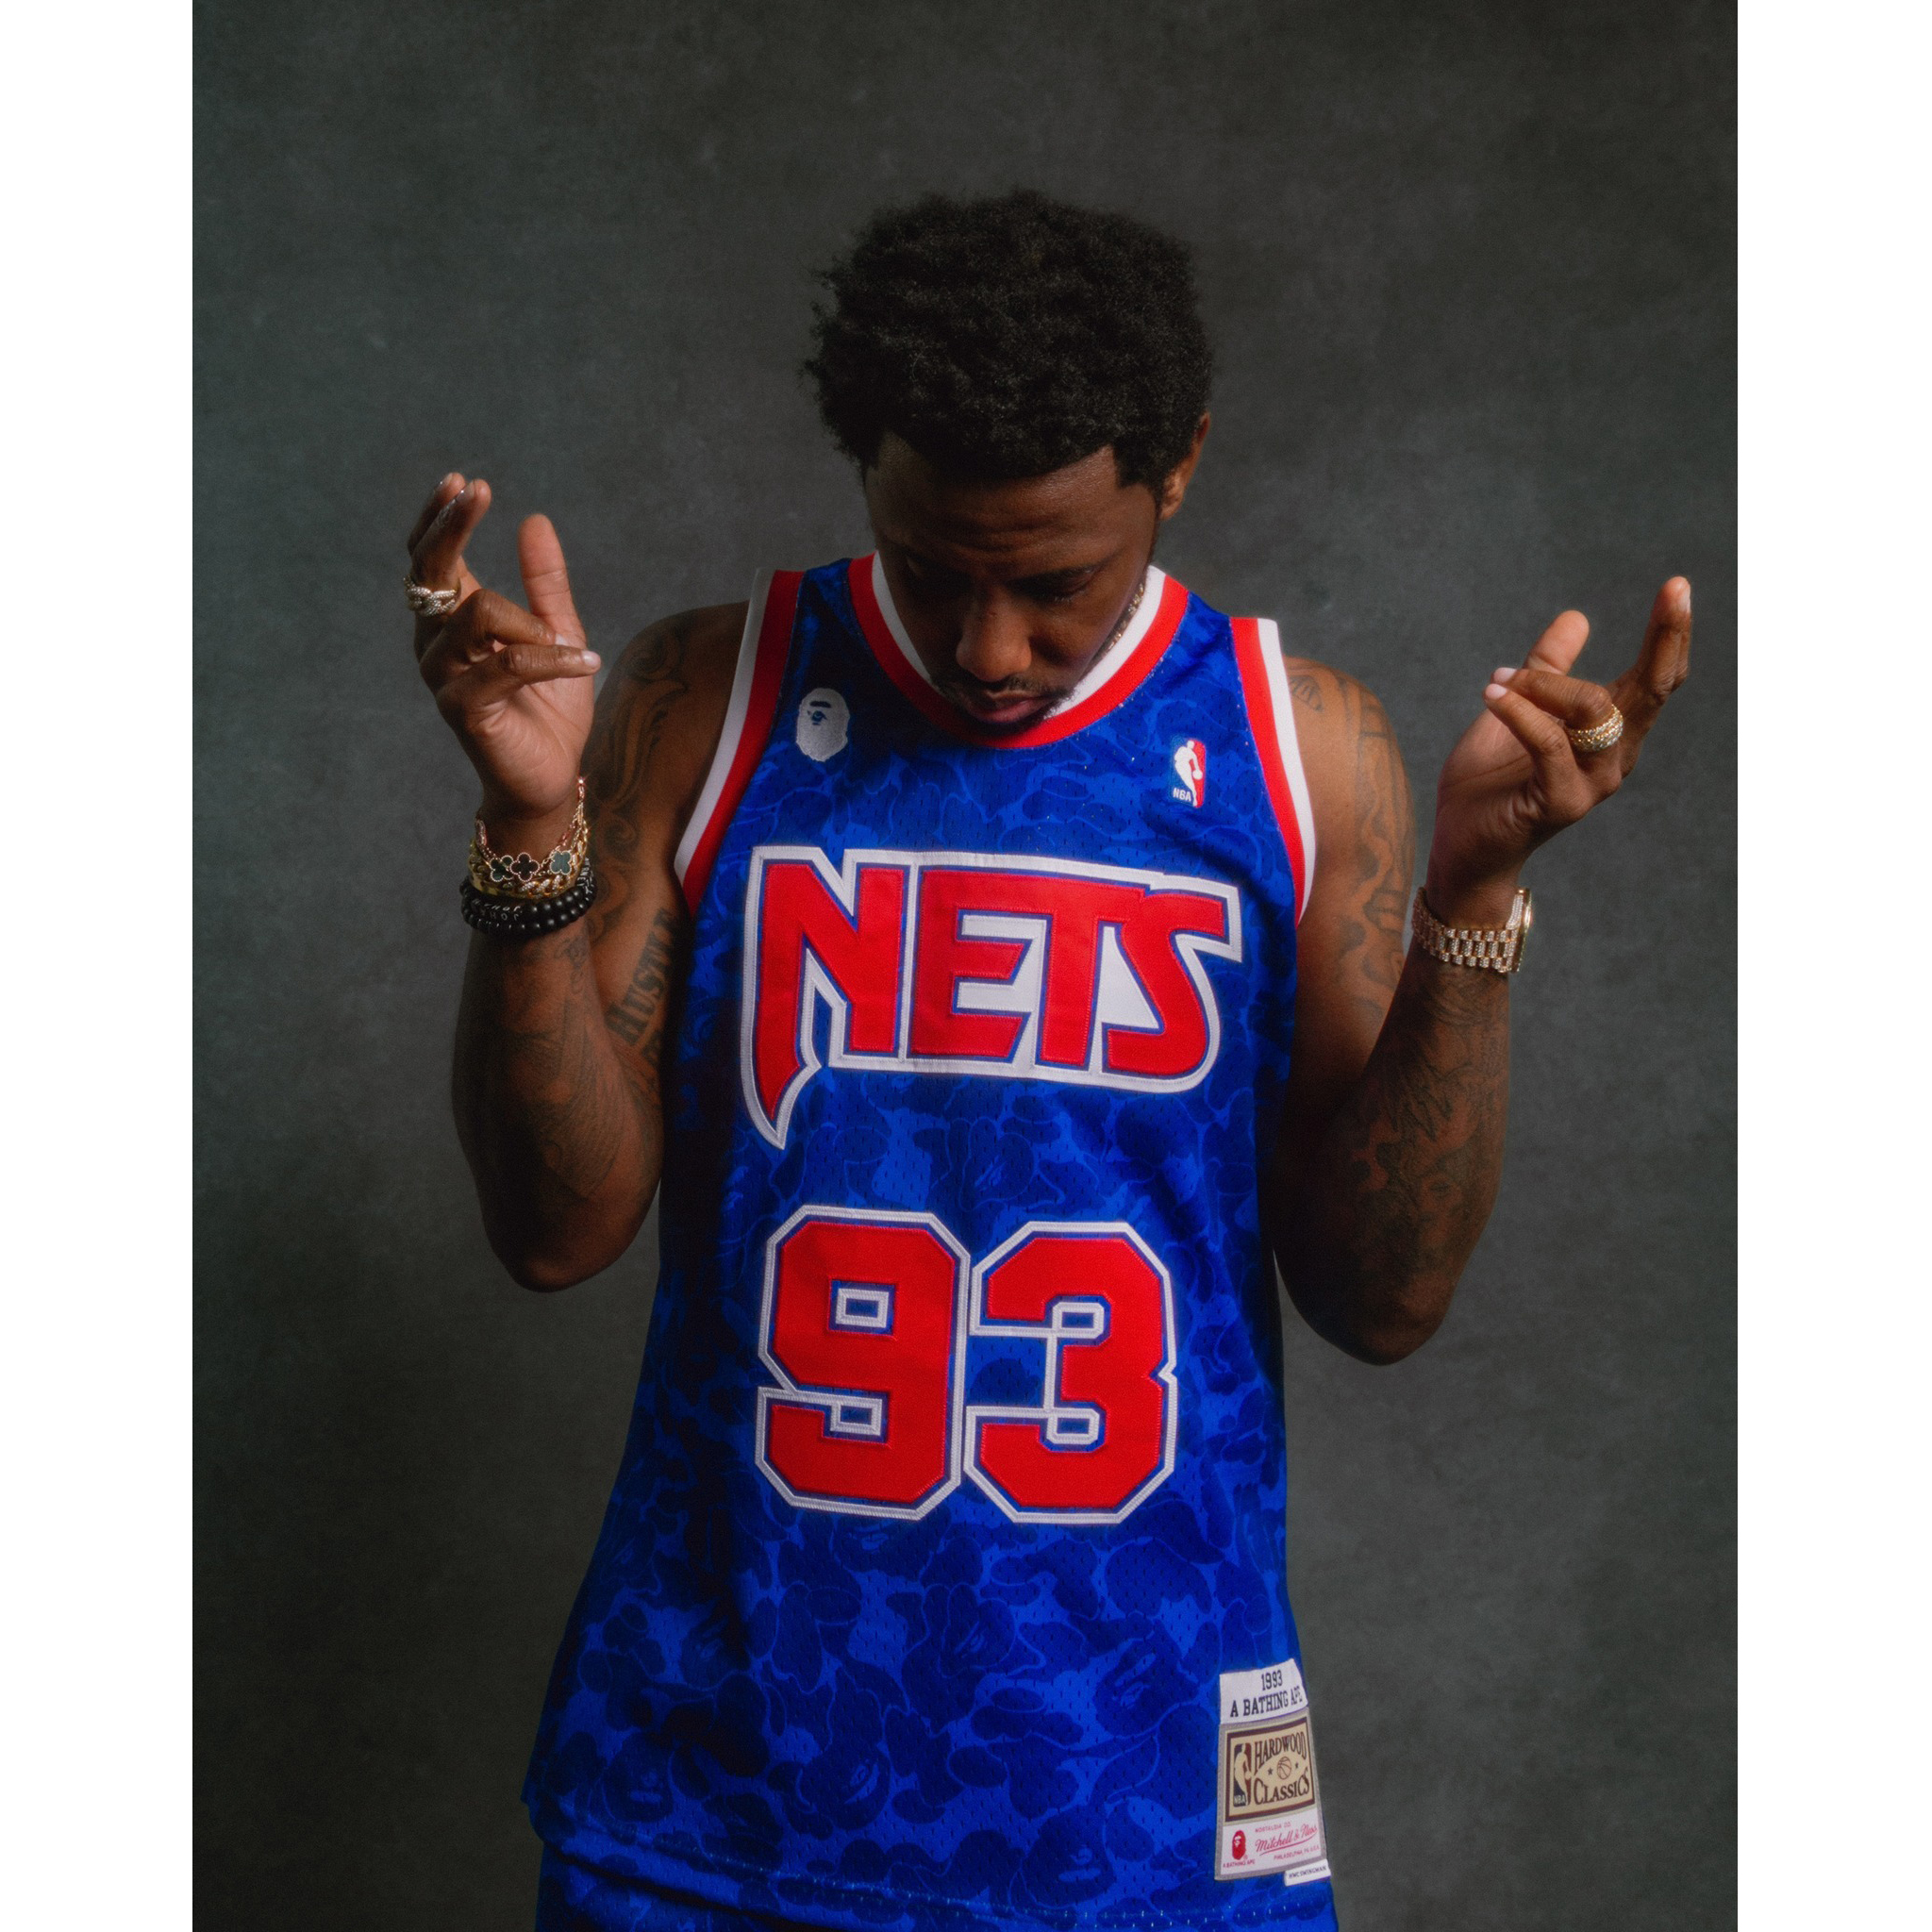 Bape x Mitchell & Ness New York Knicks NBA Jersey